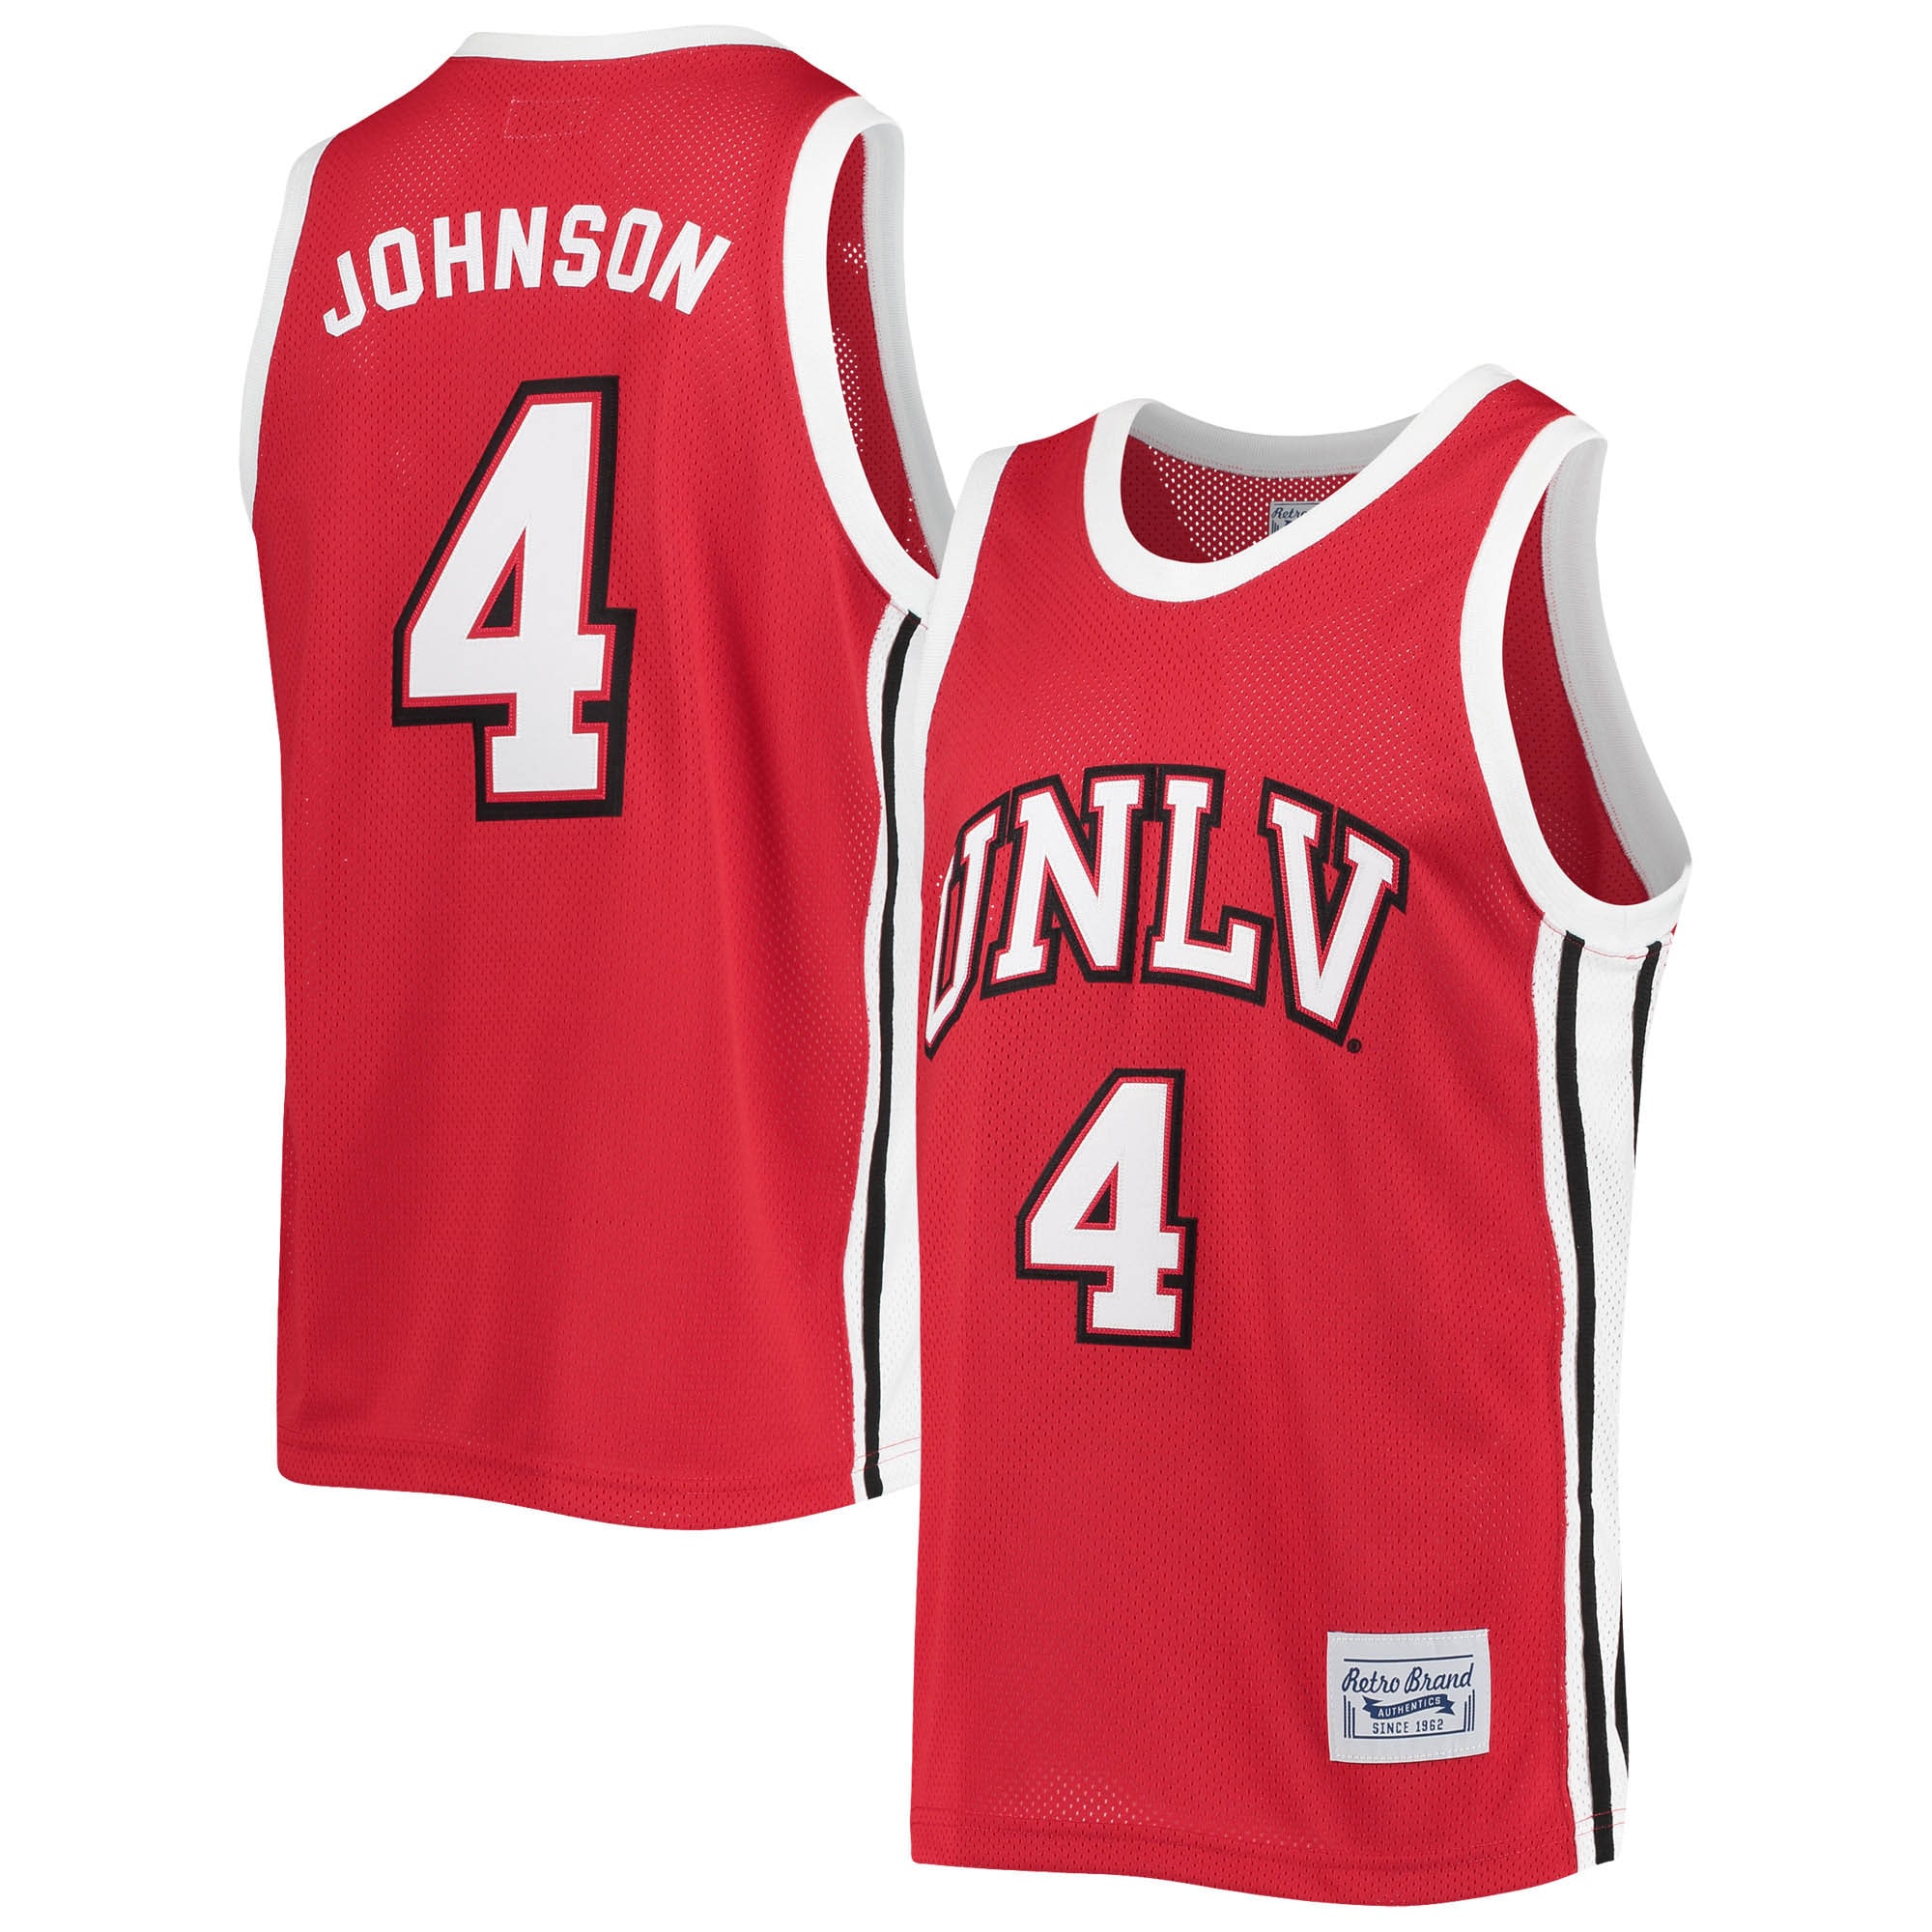 Larry Johnson Unlv Rebels Original Retro Brand Commemorative Classic Basketball Jersey - Red For Youth Women Men